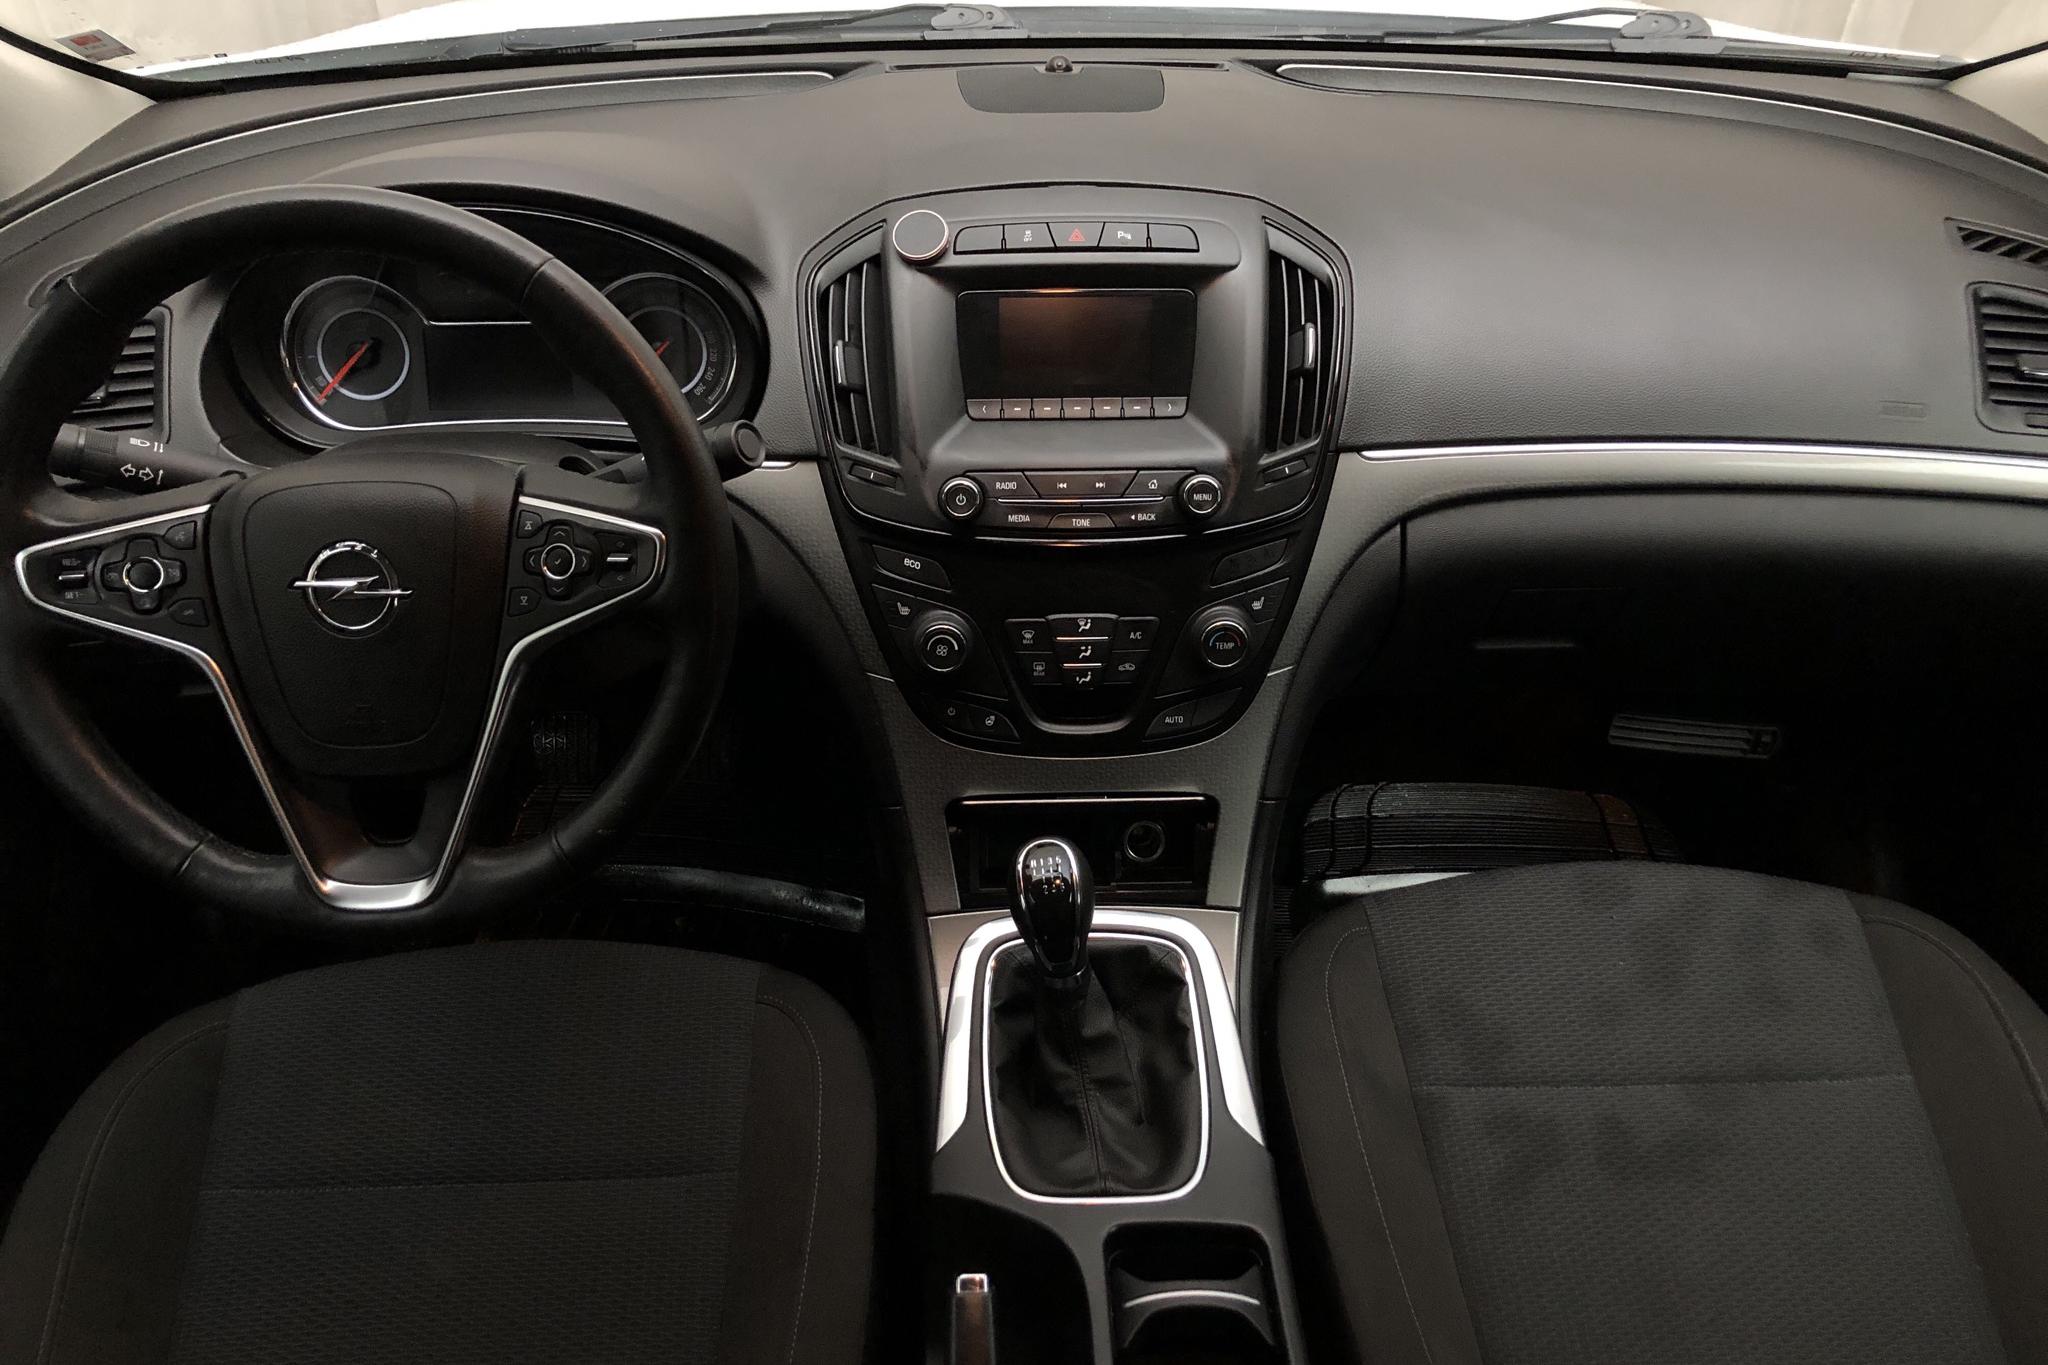 Opel Insignia 1.6 CDTI ecoFLEX 5dr (136hk) - 45 910 km - Manual - white - 2017